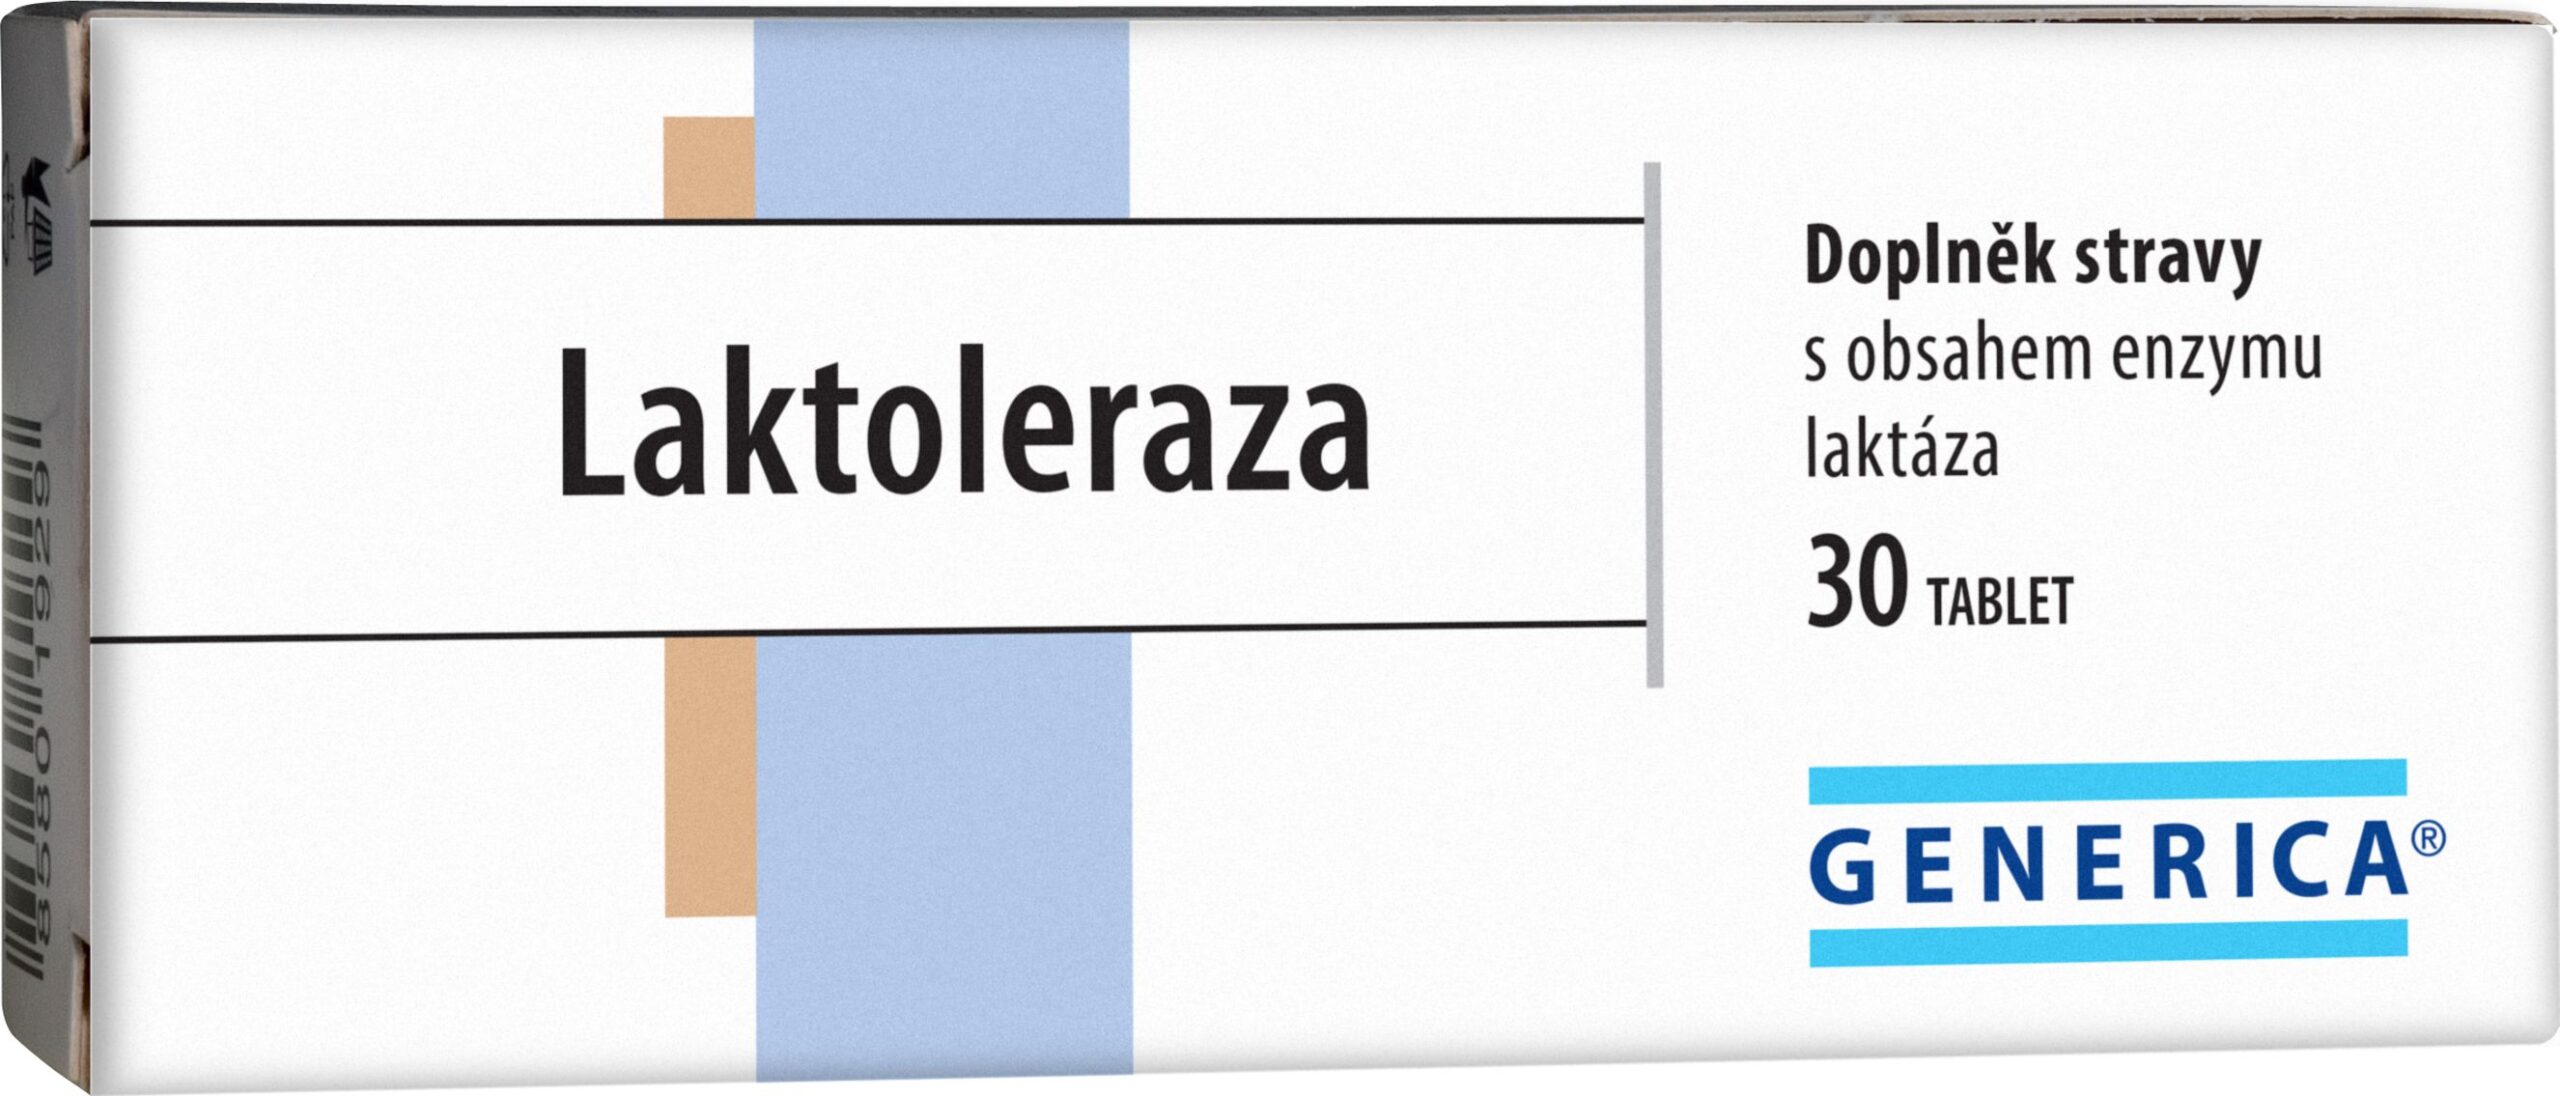 Generica Laktoleraza 30 tablet Generica